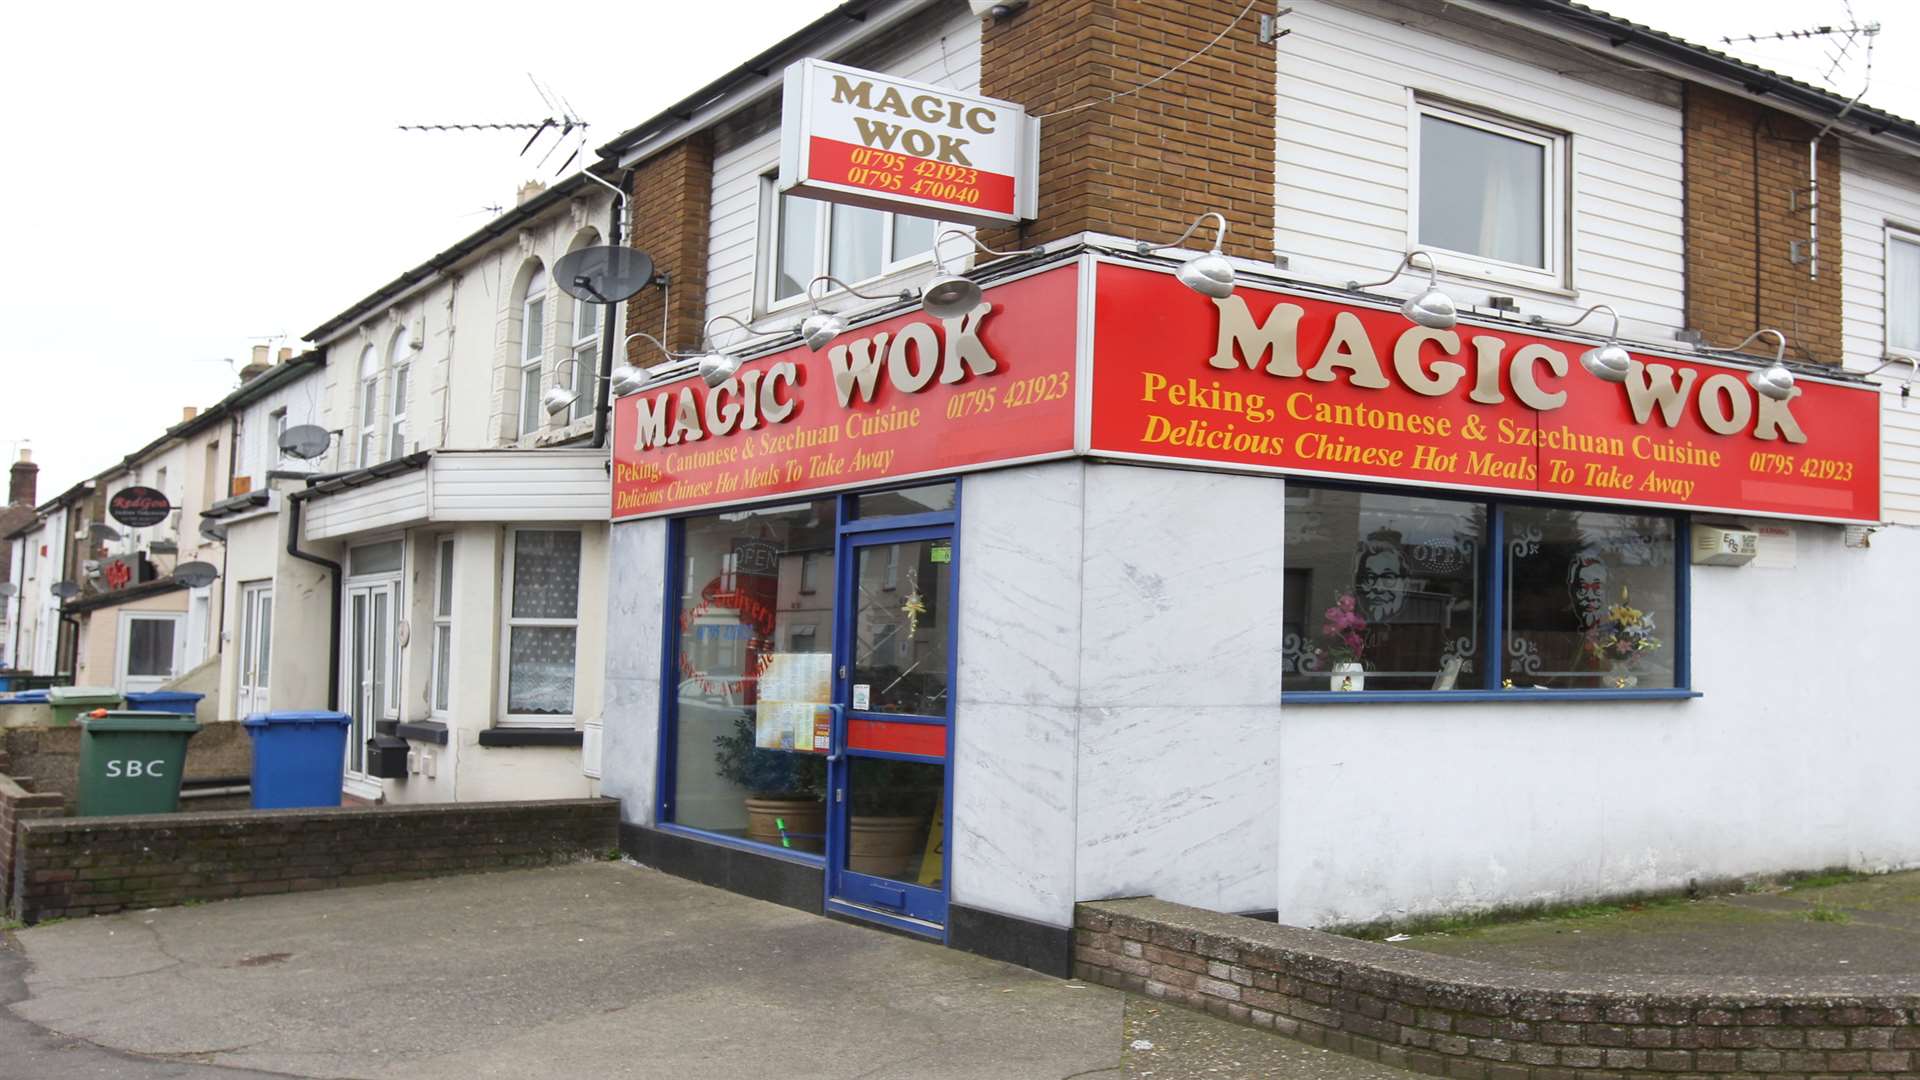 The Magic Wok in Sittingbourne